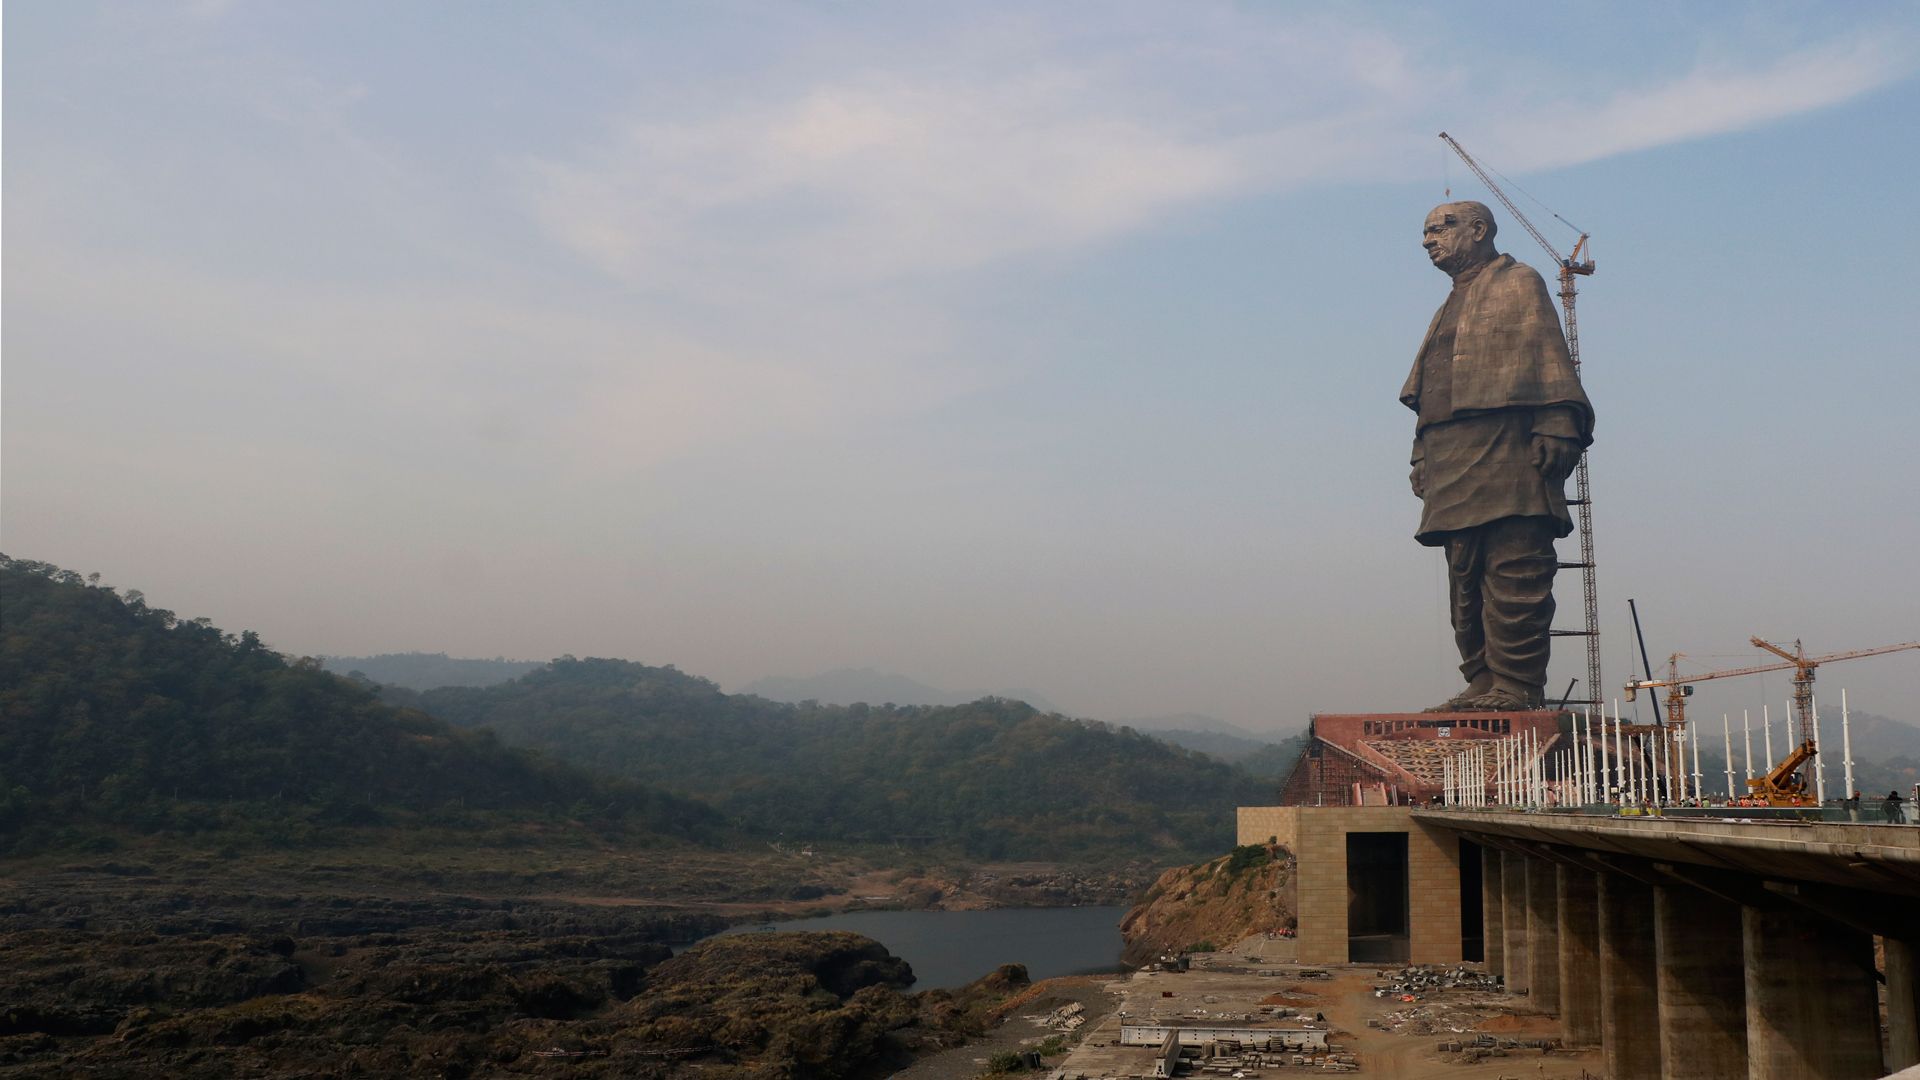 Taller than Buddha and Christ, Sardar Patel's Statue of Unity